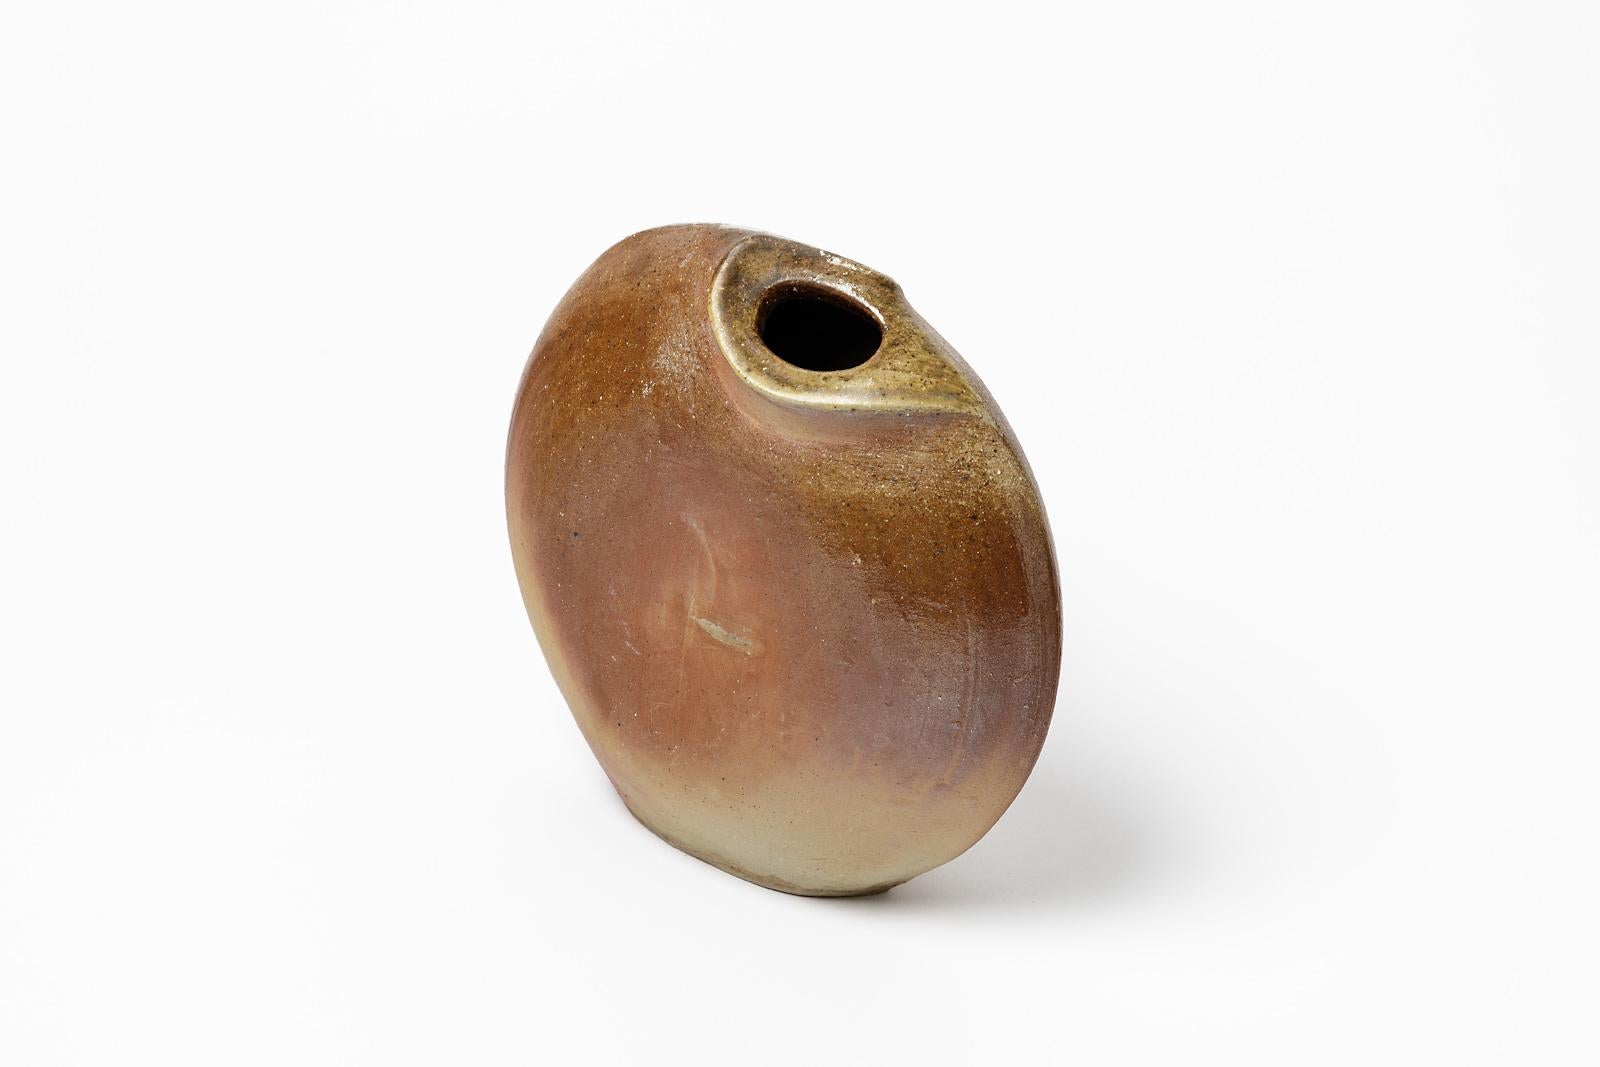 Beaux Arts Ceramic Vase by Robert Heraud, circa 1970-1980 For Sale